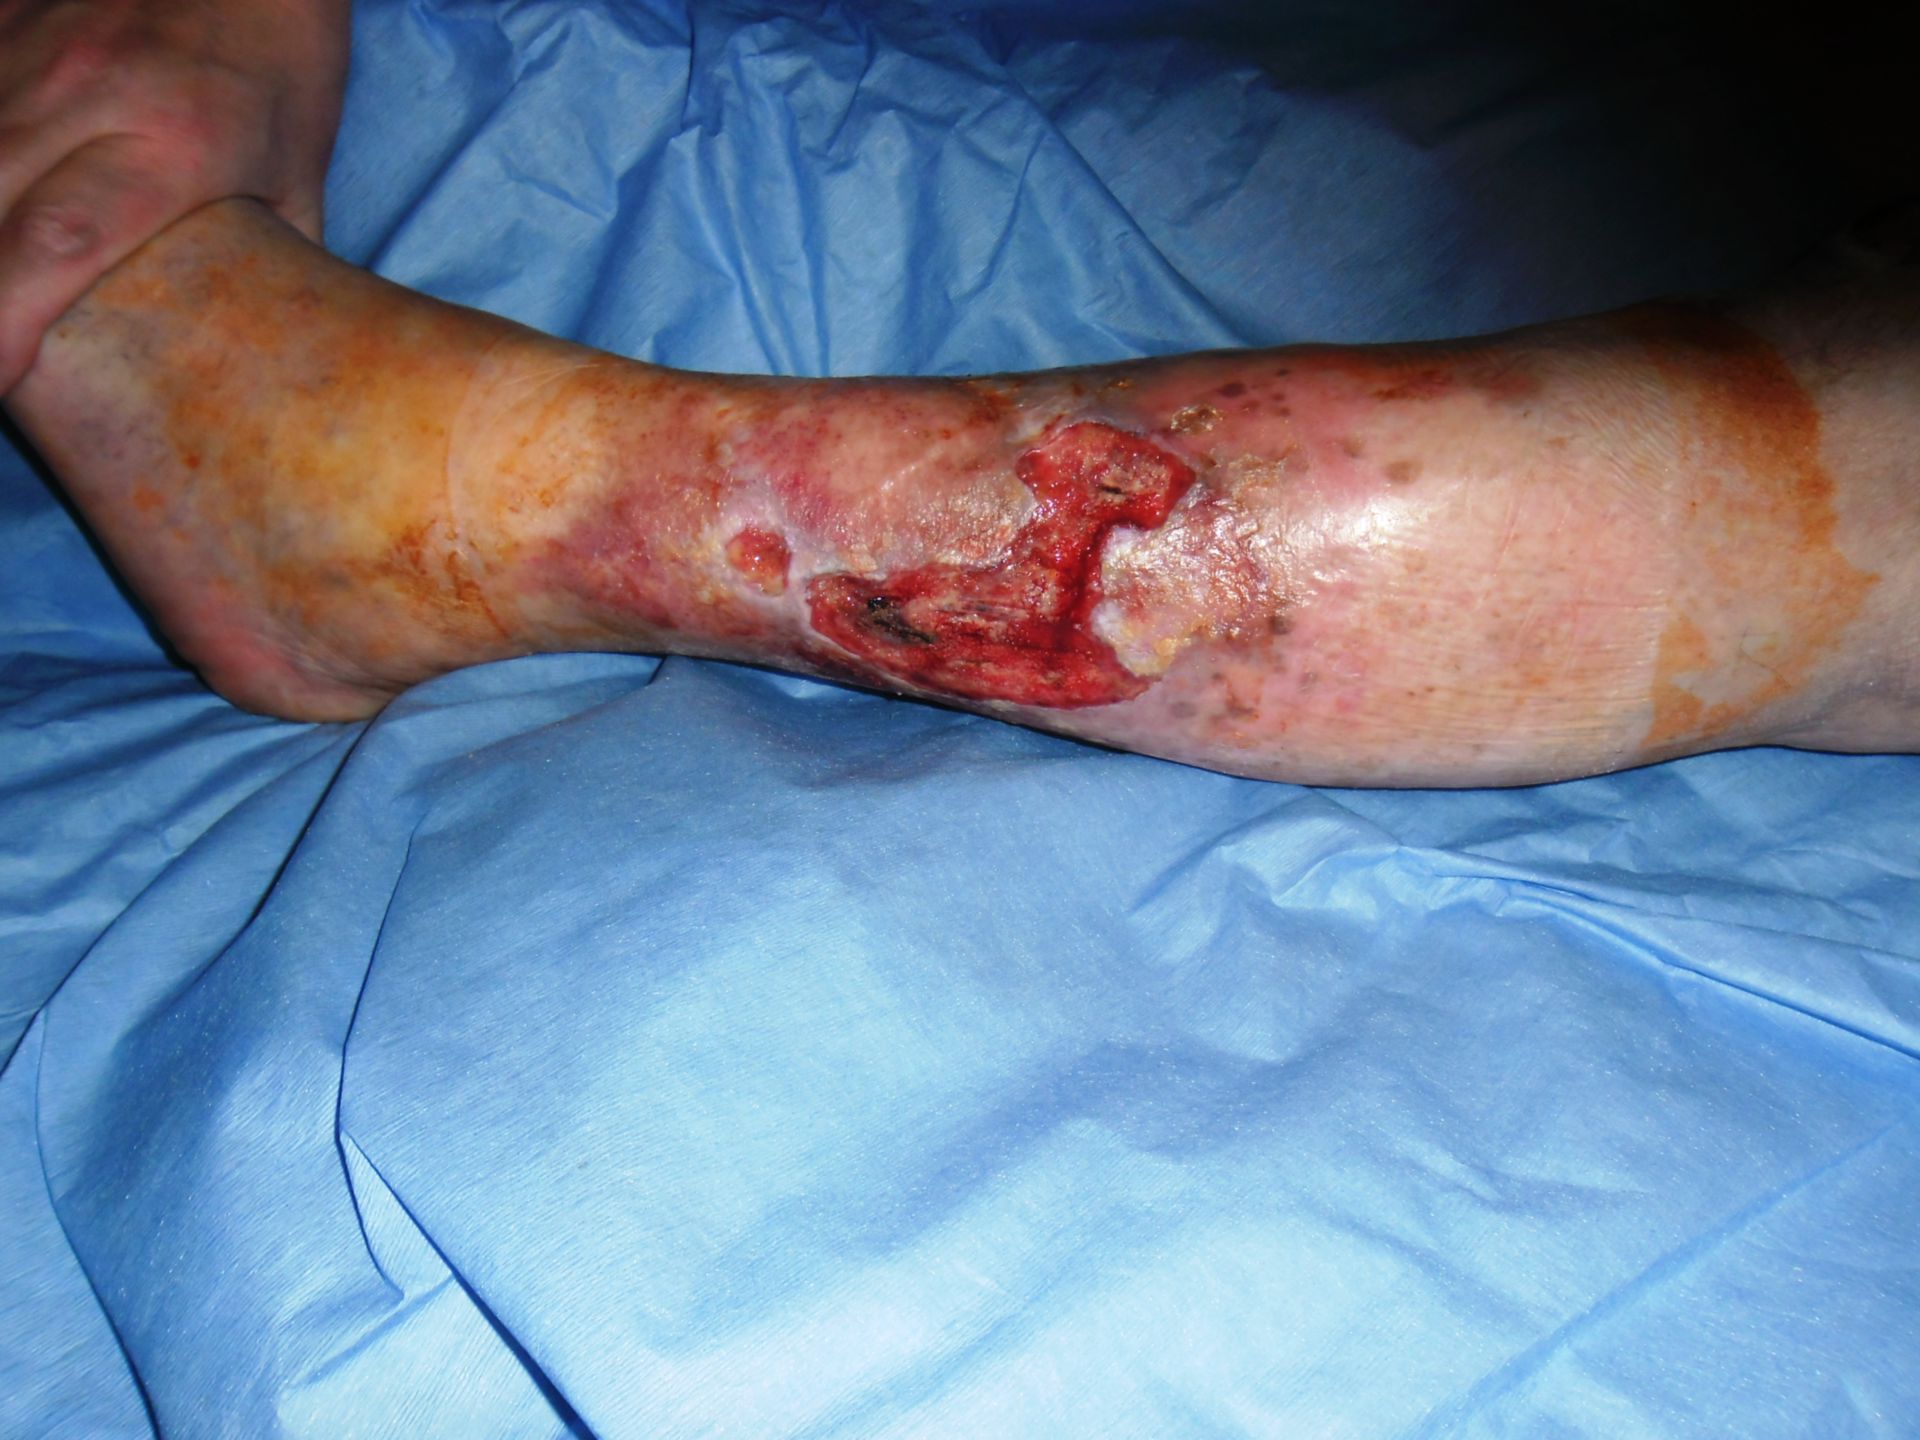 Ulcera varicosa